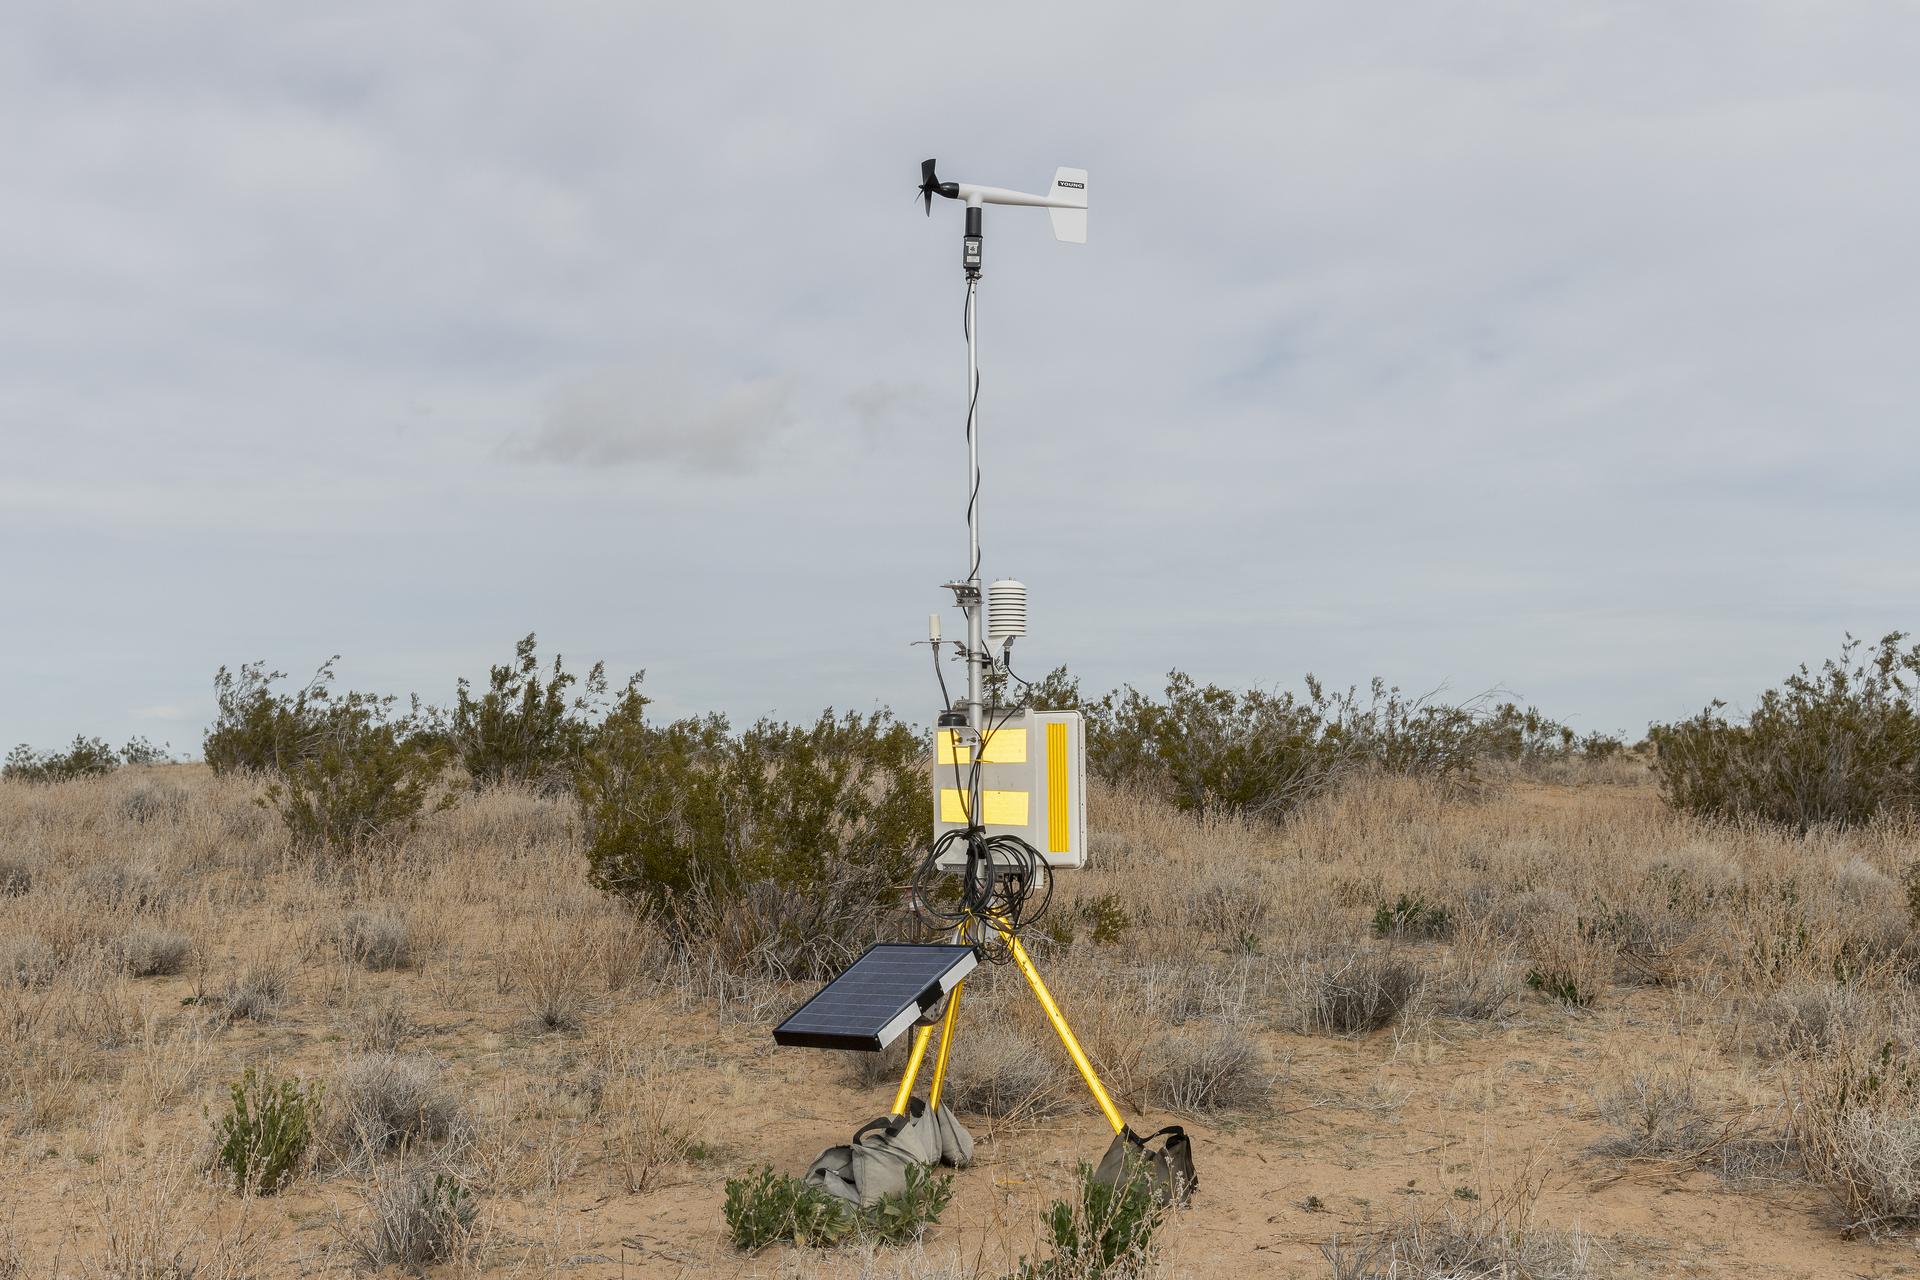 mikrofon dan pengukur angin terhubung ke panel surya di padang pasir